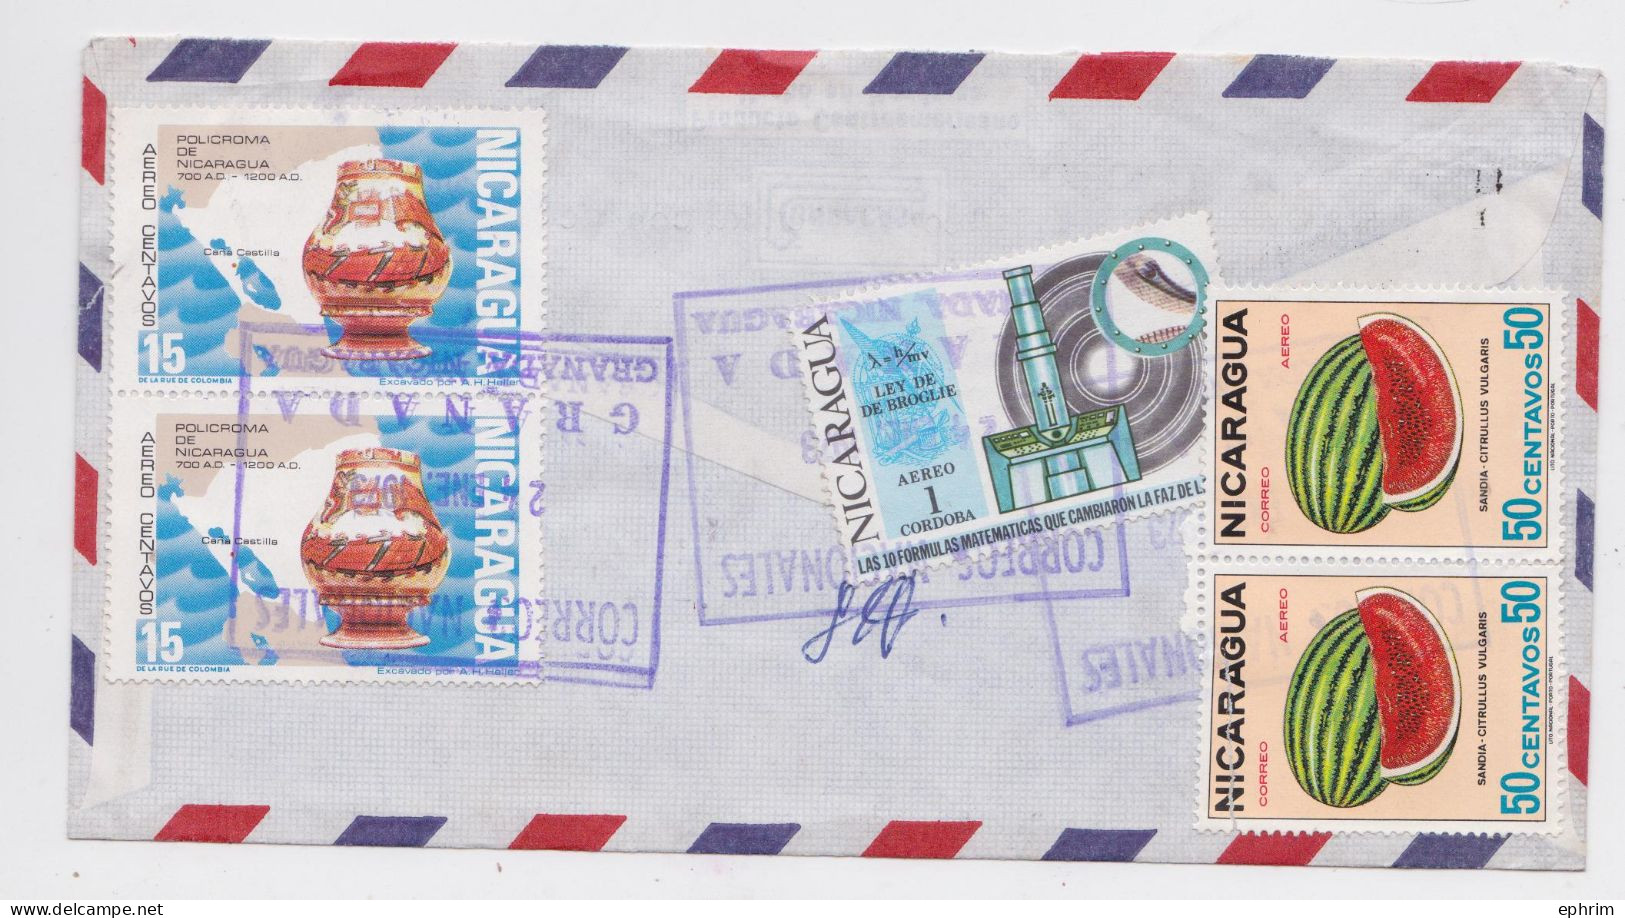 Nicaragua Granada Lettre Timbre Archéologie Mathématiques Pastèque Stamp X5 Air Mail Cover Sello Correo Aereo 1973 - Nicaragua